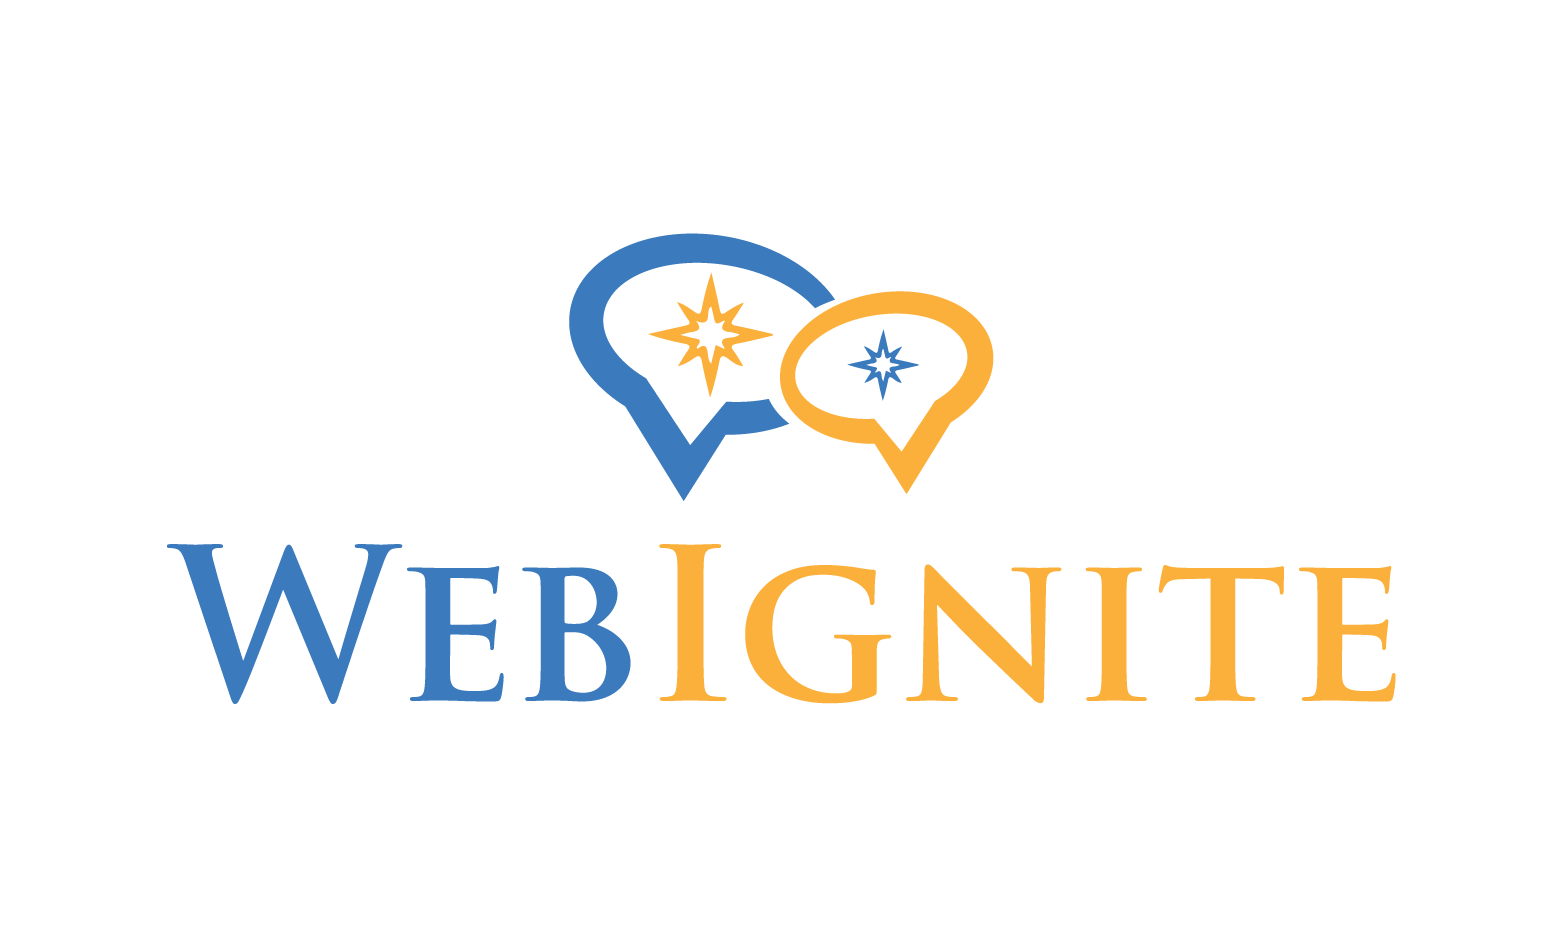 WebIgnite.com - Creative brandable domain for sale